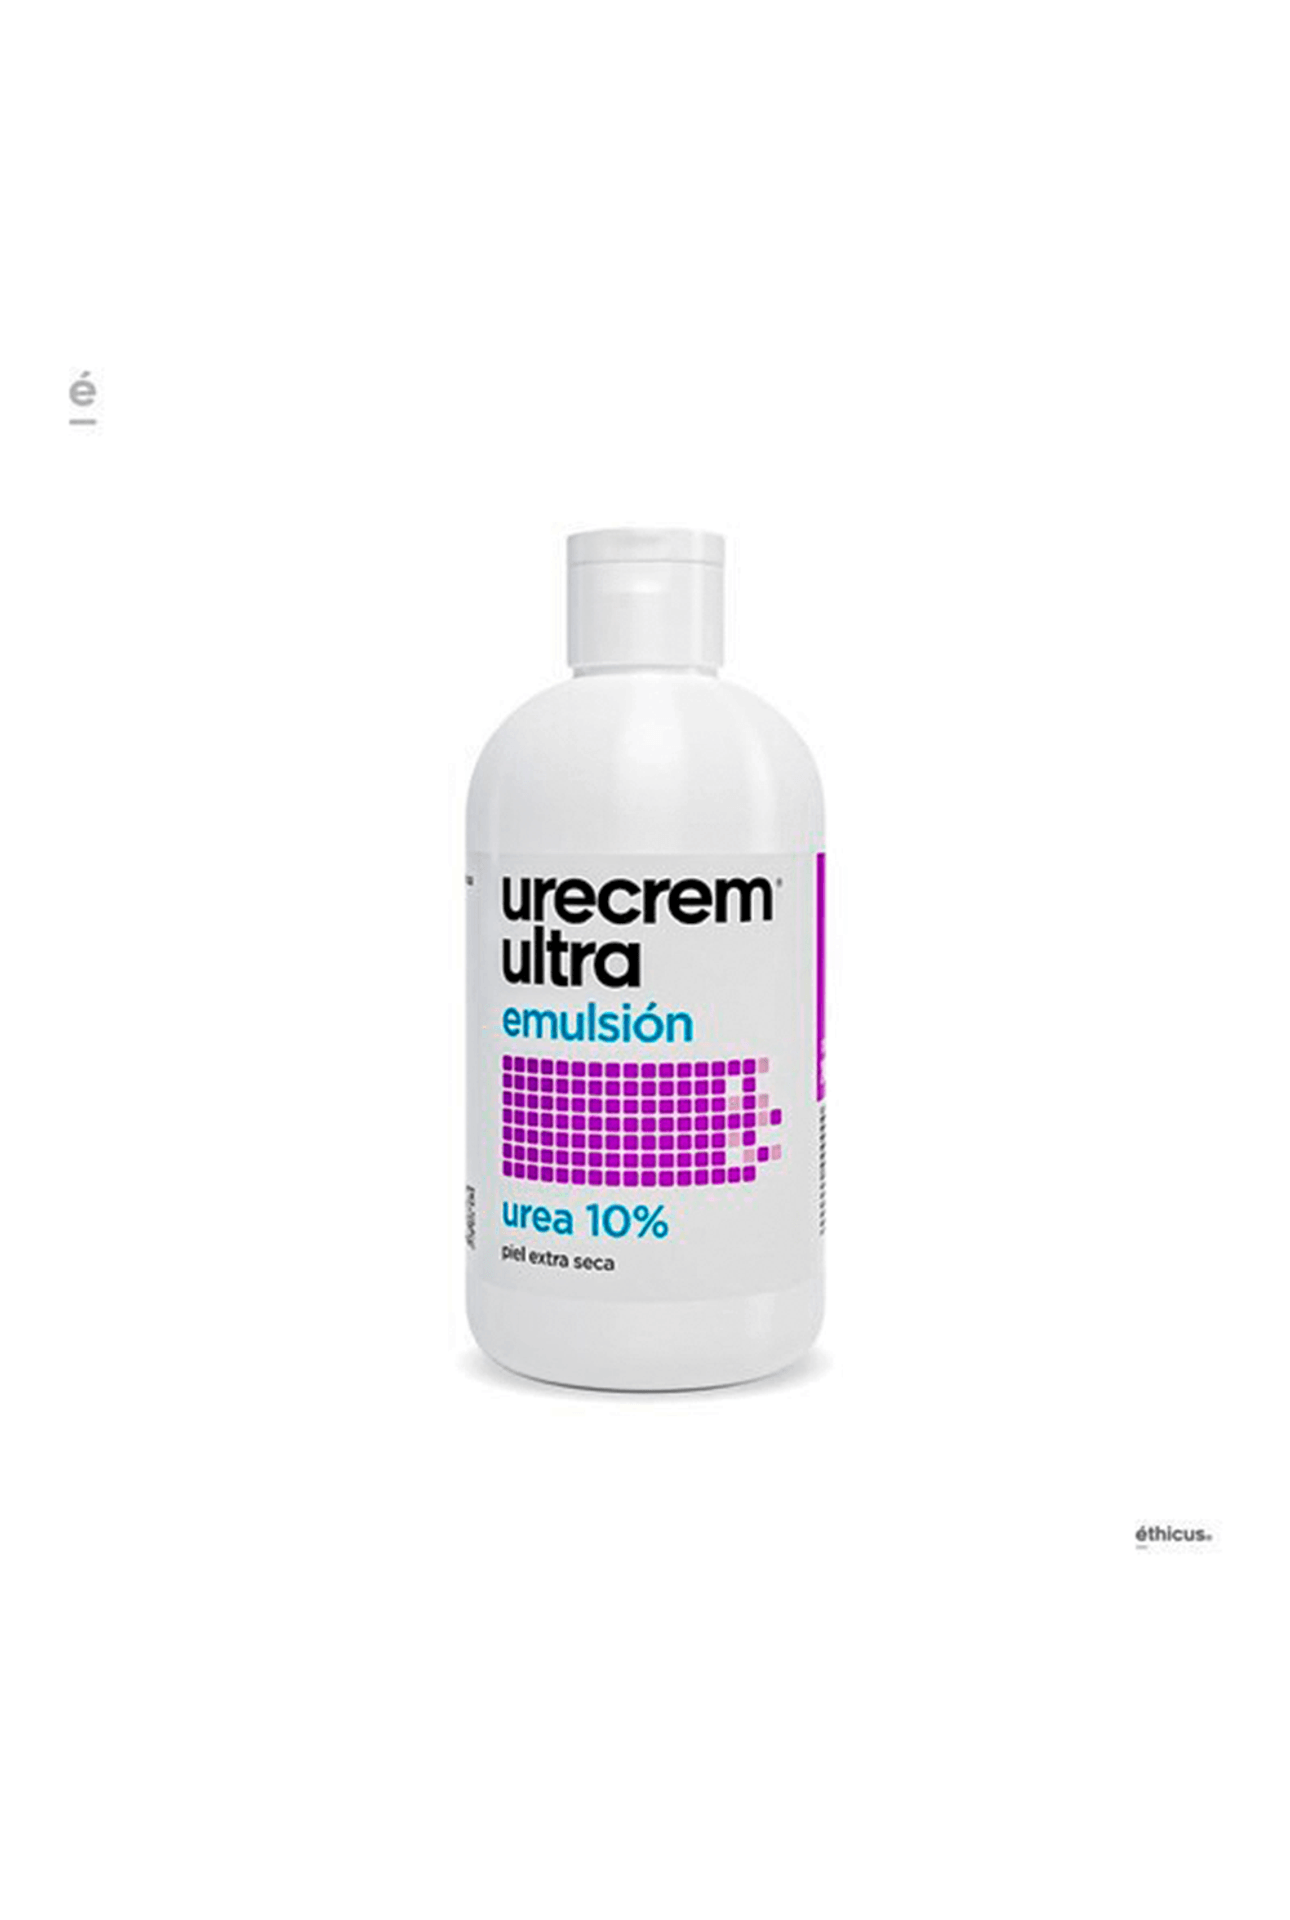 Urecrem-Ultra-Emulsion-Urecrem-Urea-10--x-240-ml-7798026720776_img1